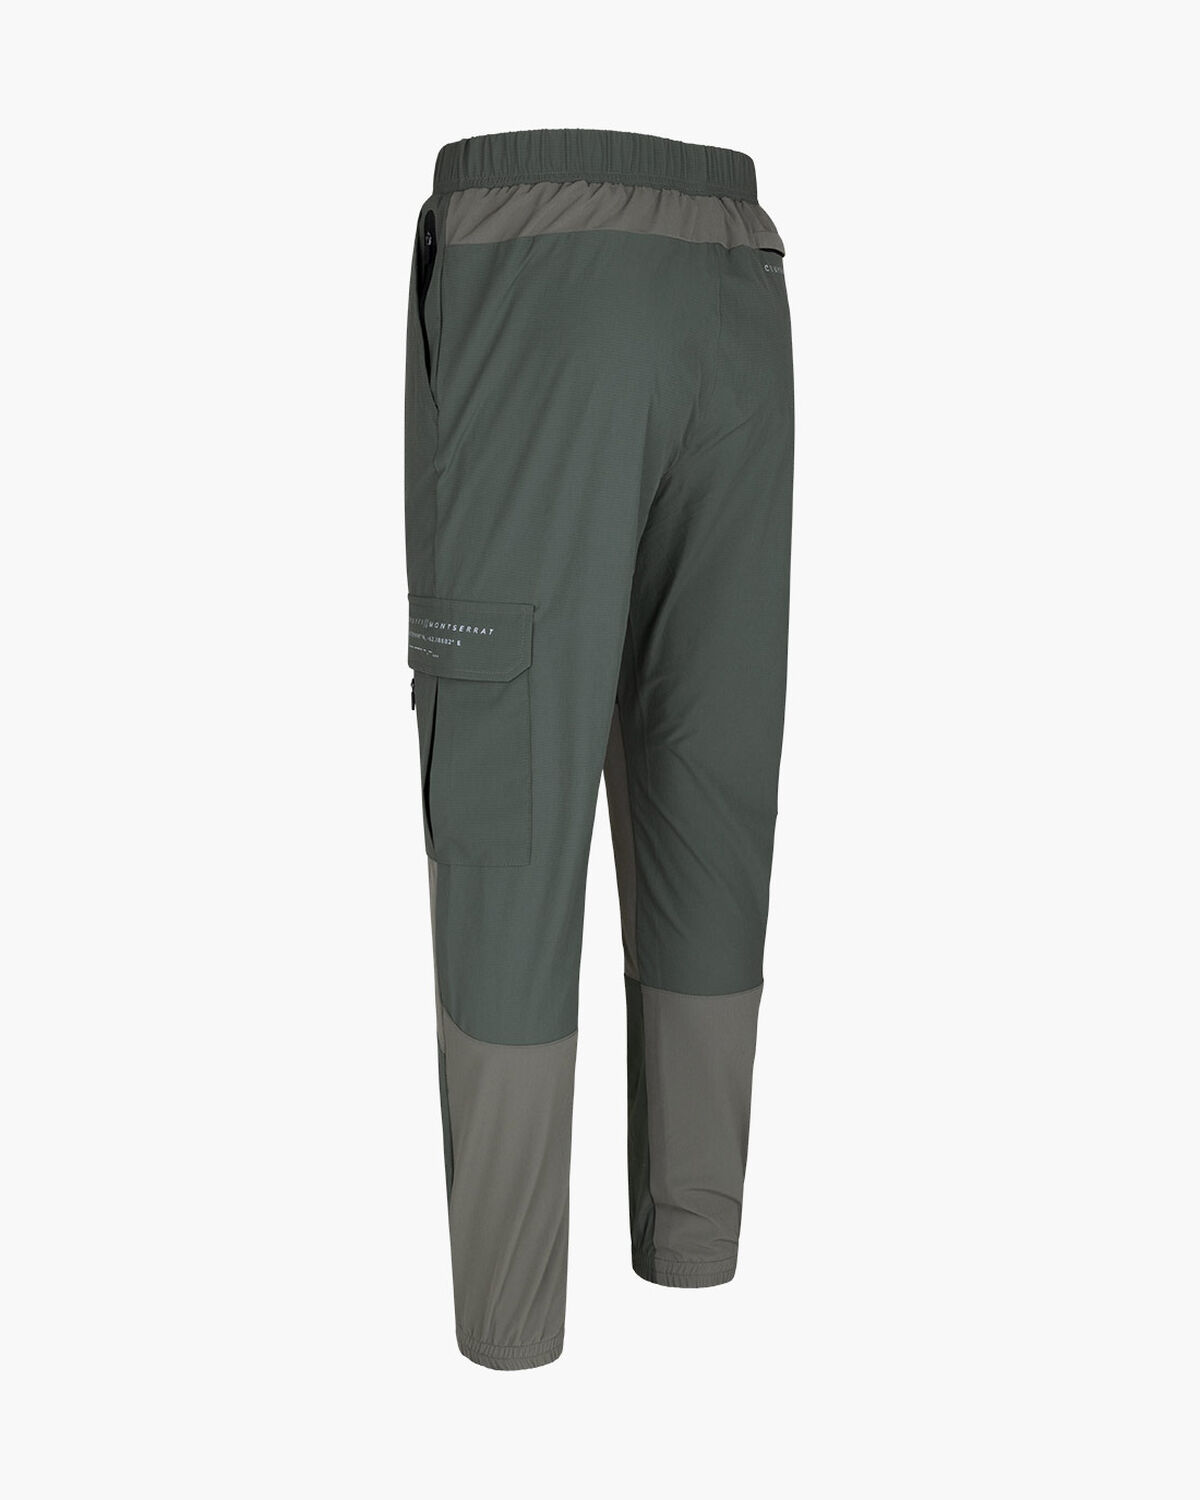 Mantel Track Pants, Army green, hi-res